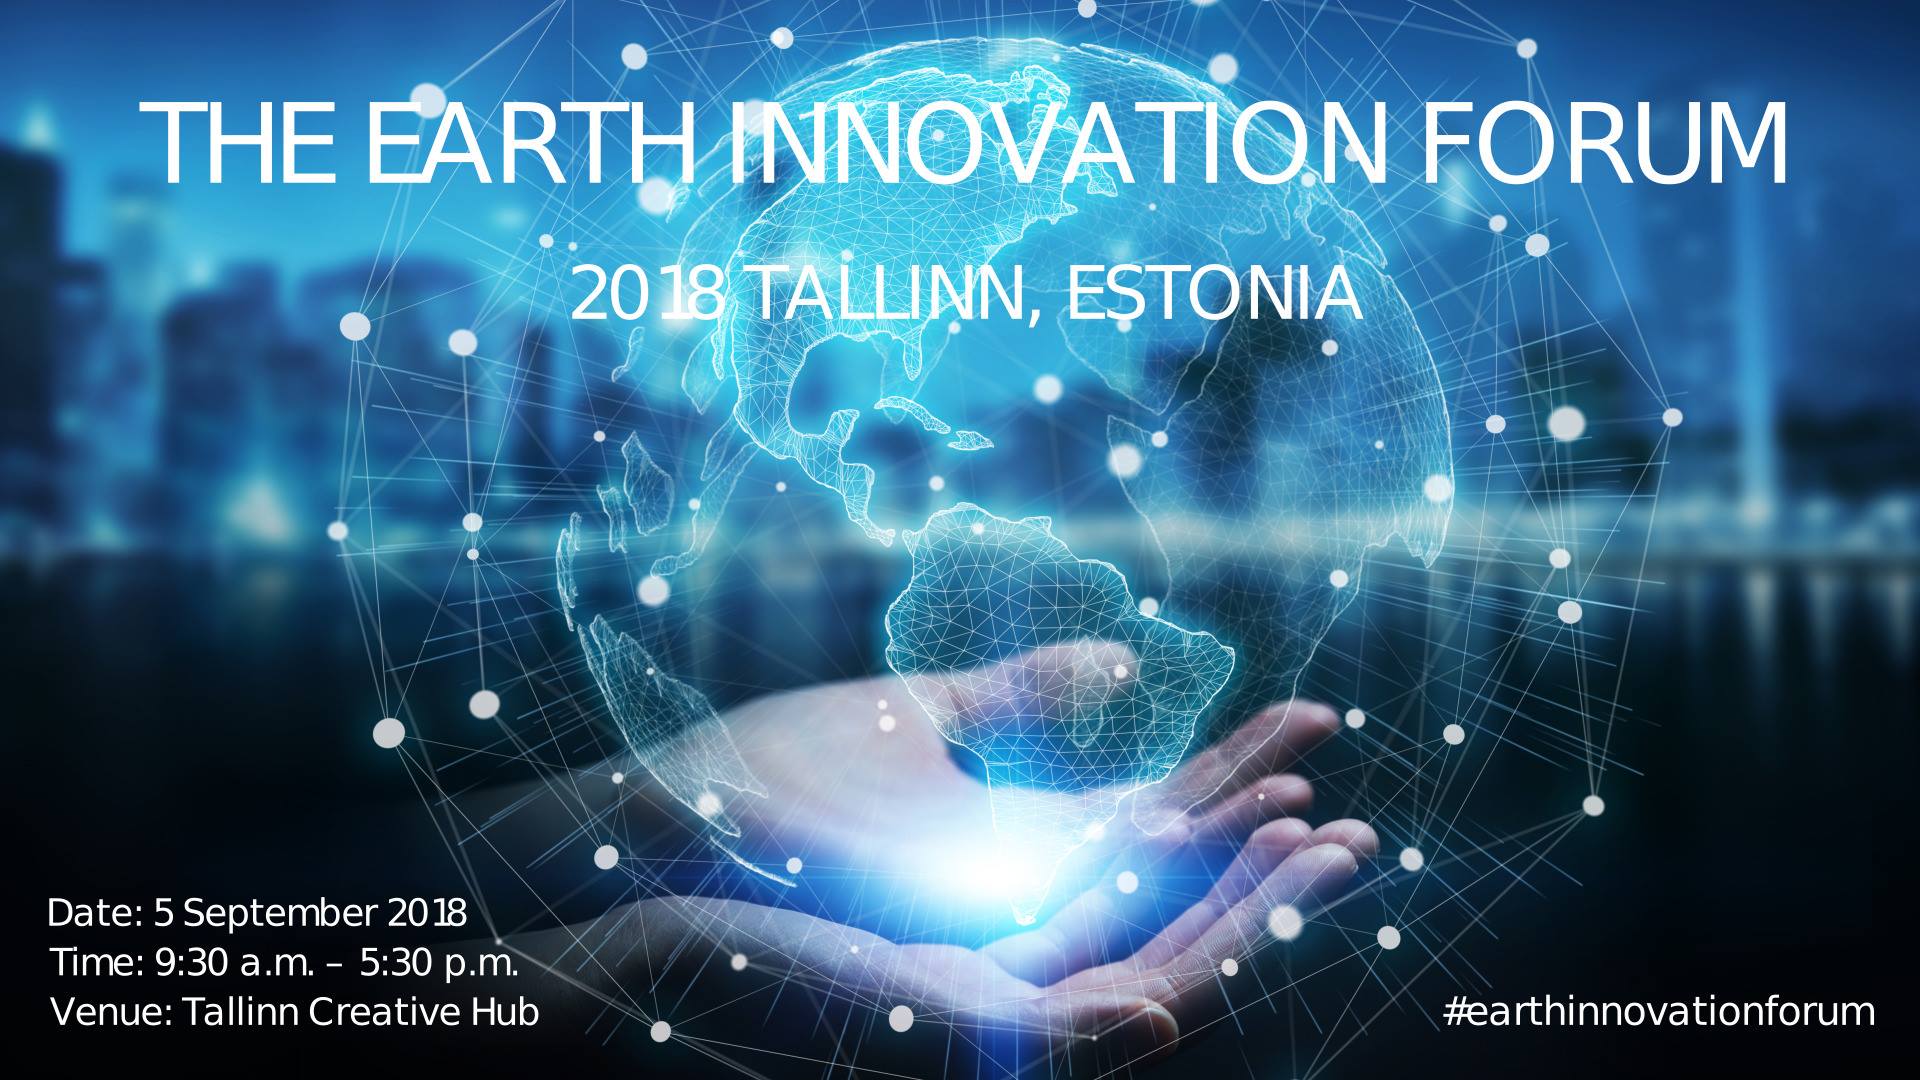 7969The Earth Innovation Forum